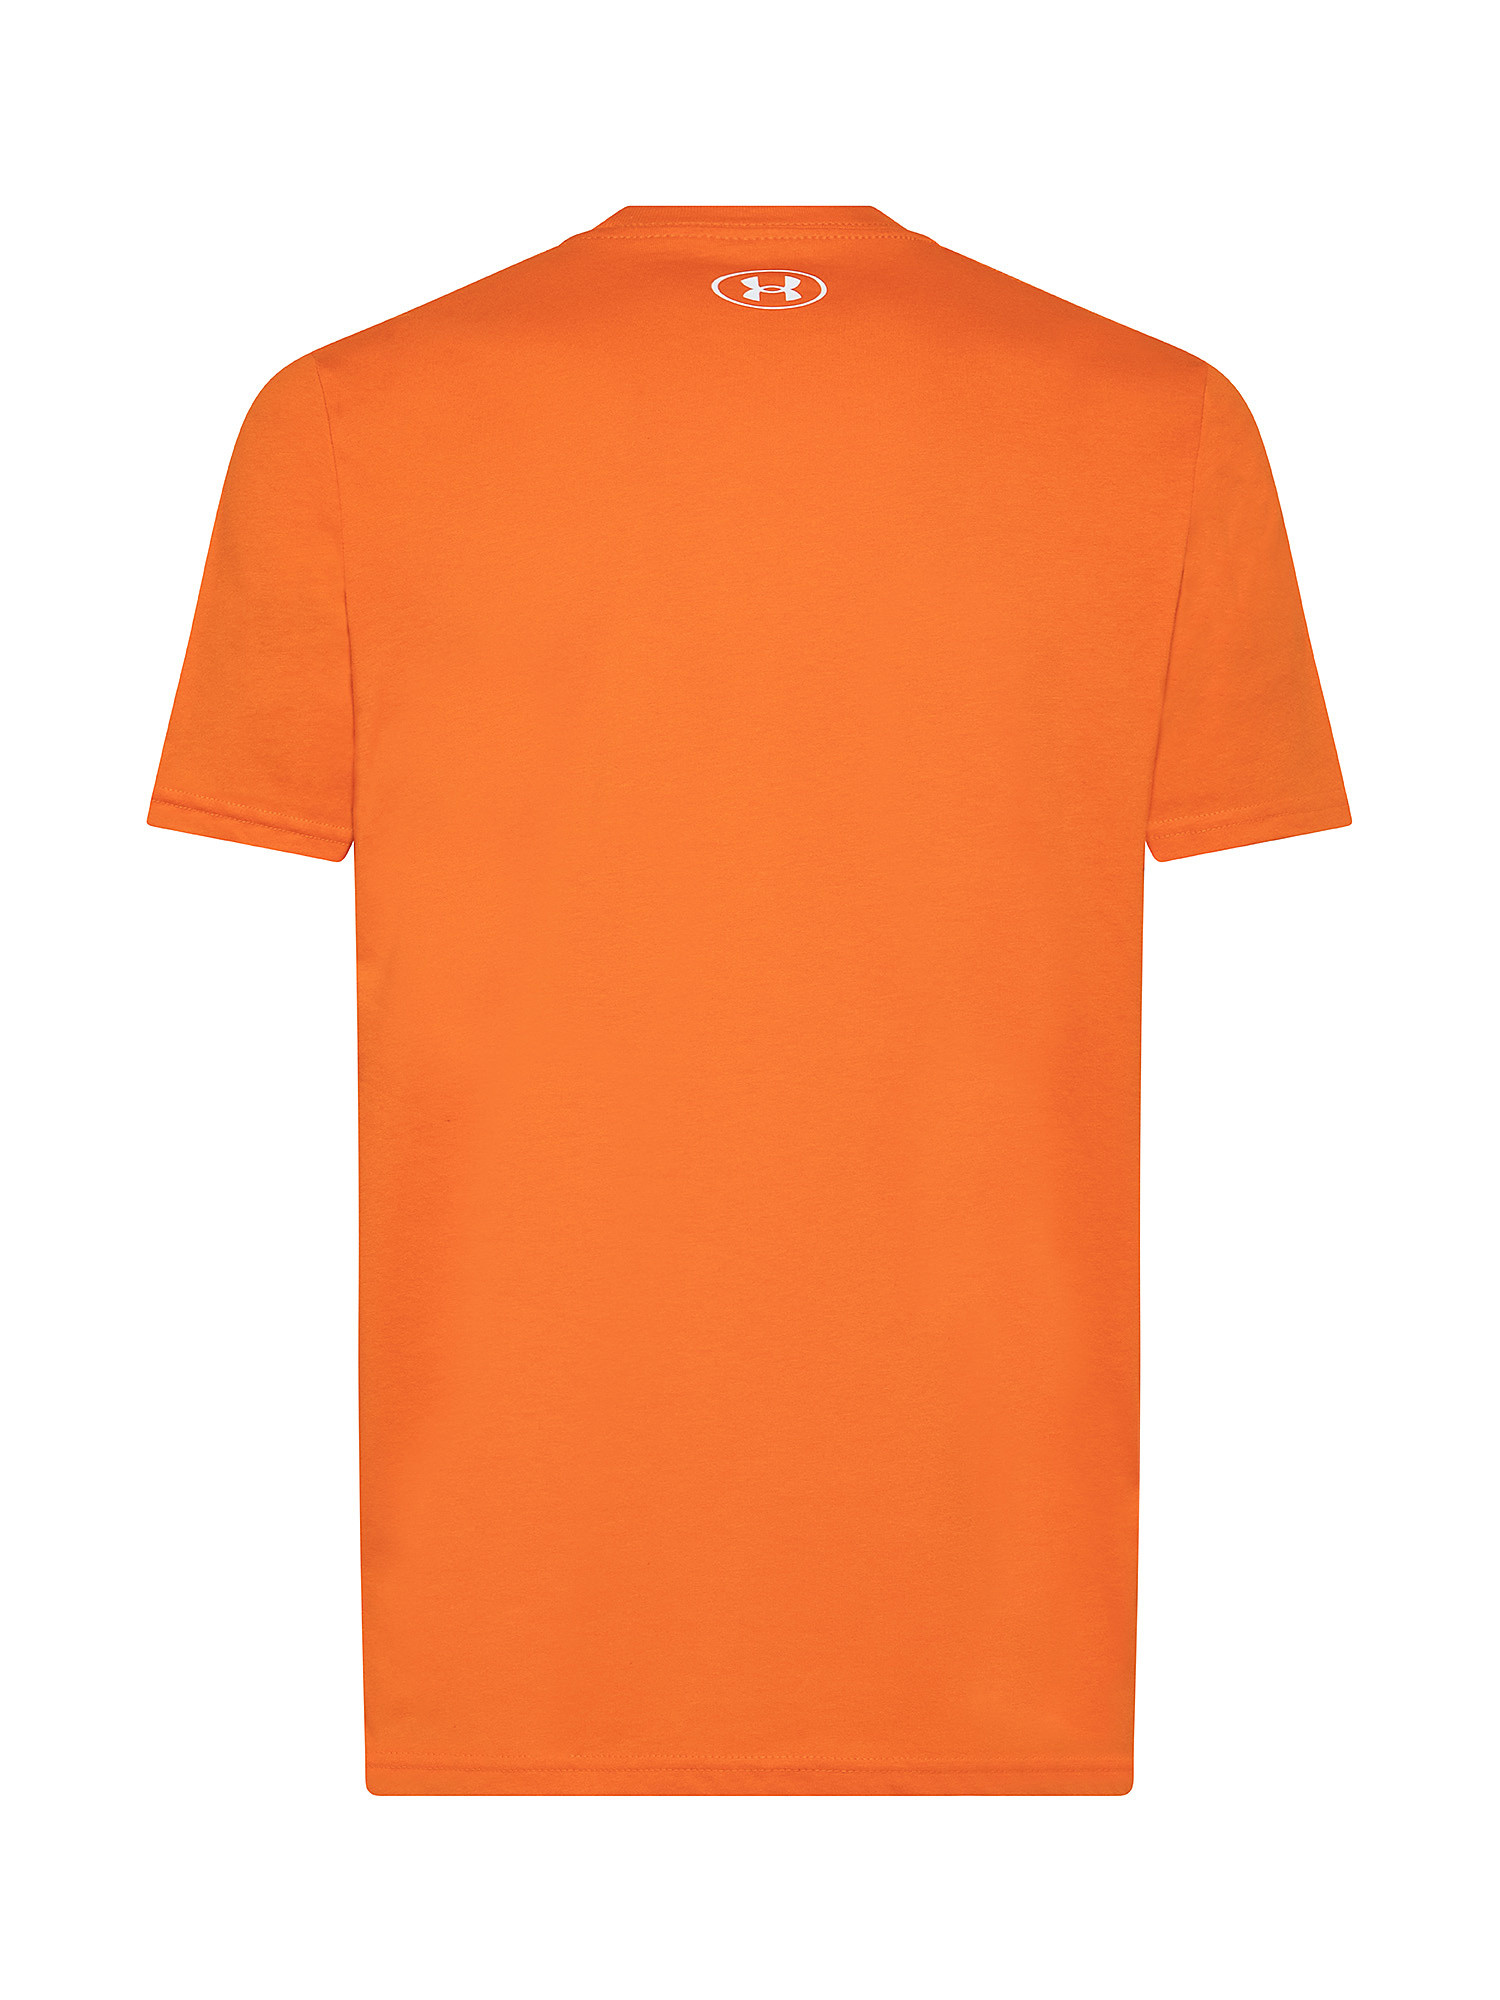 Graphic T-shirt, Orange, large image number 1